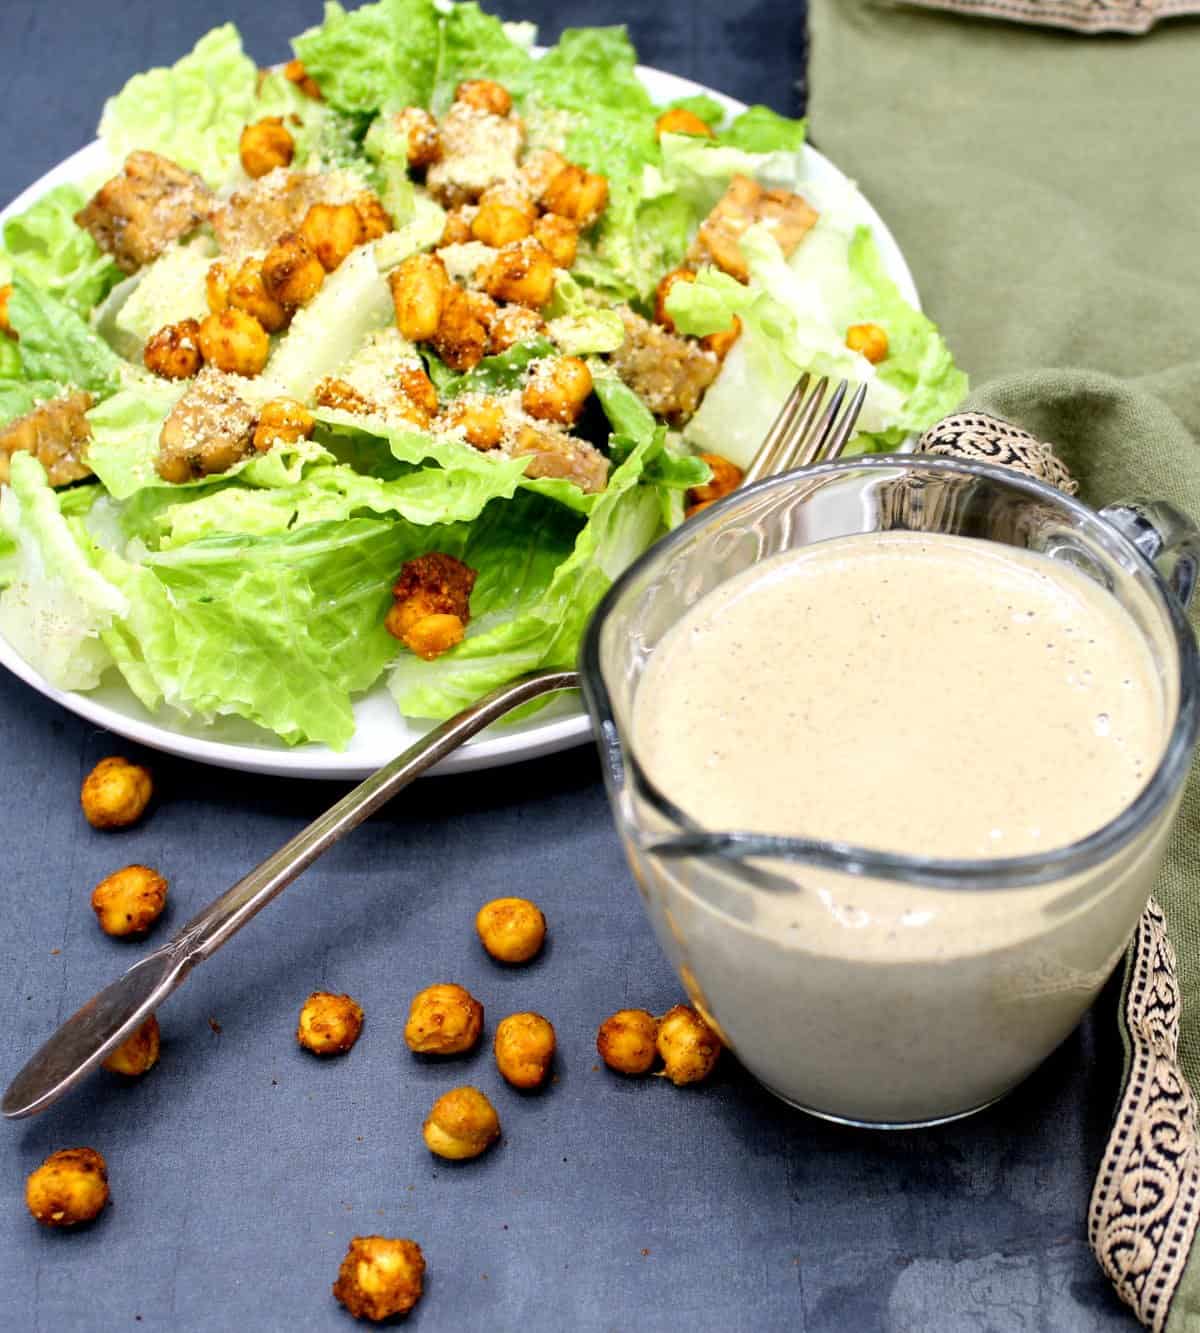 A glass beaker with vegan caesar salad dressing and a plate of vegan caesar salad with tempeh and chickpea croutons.